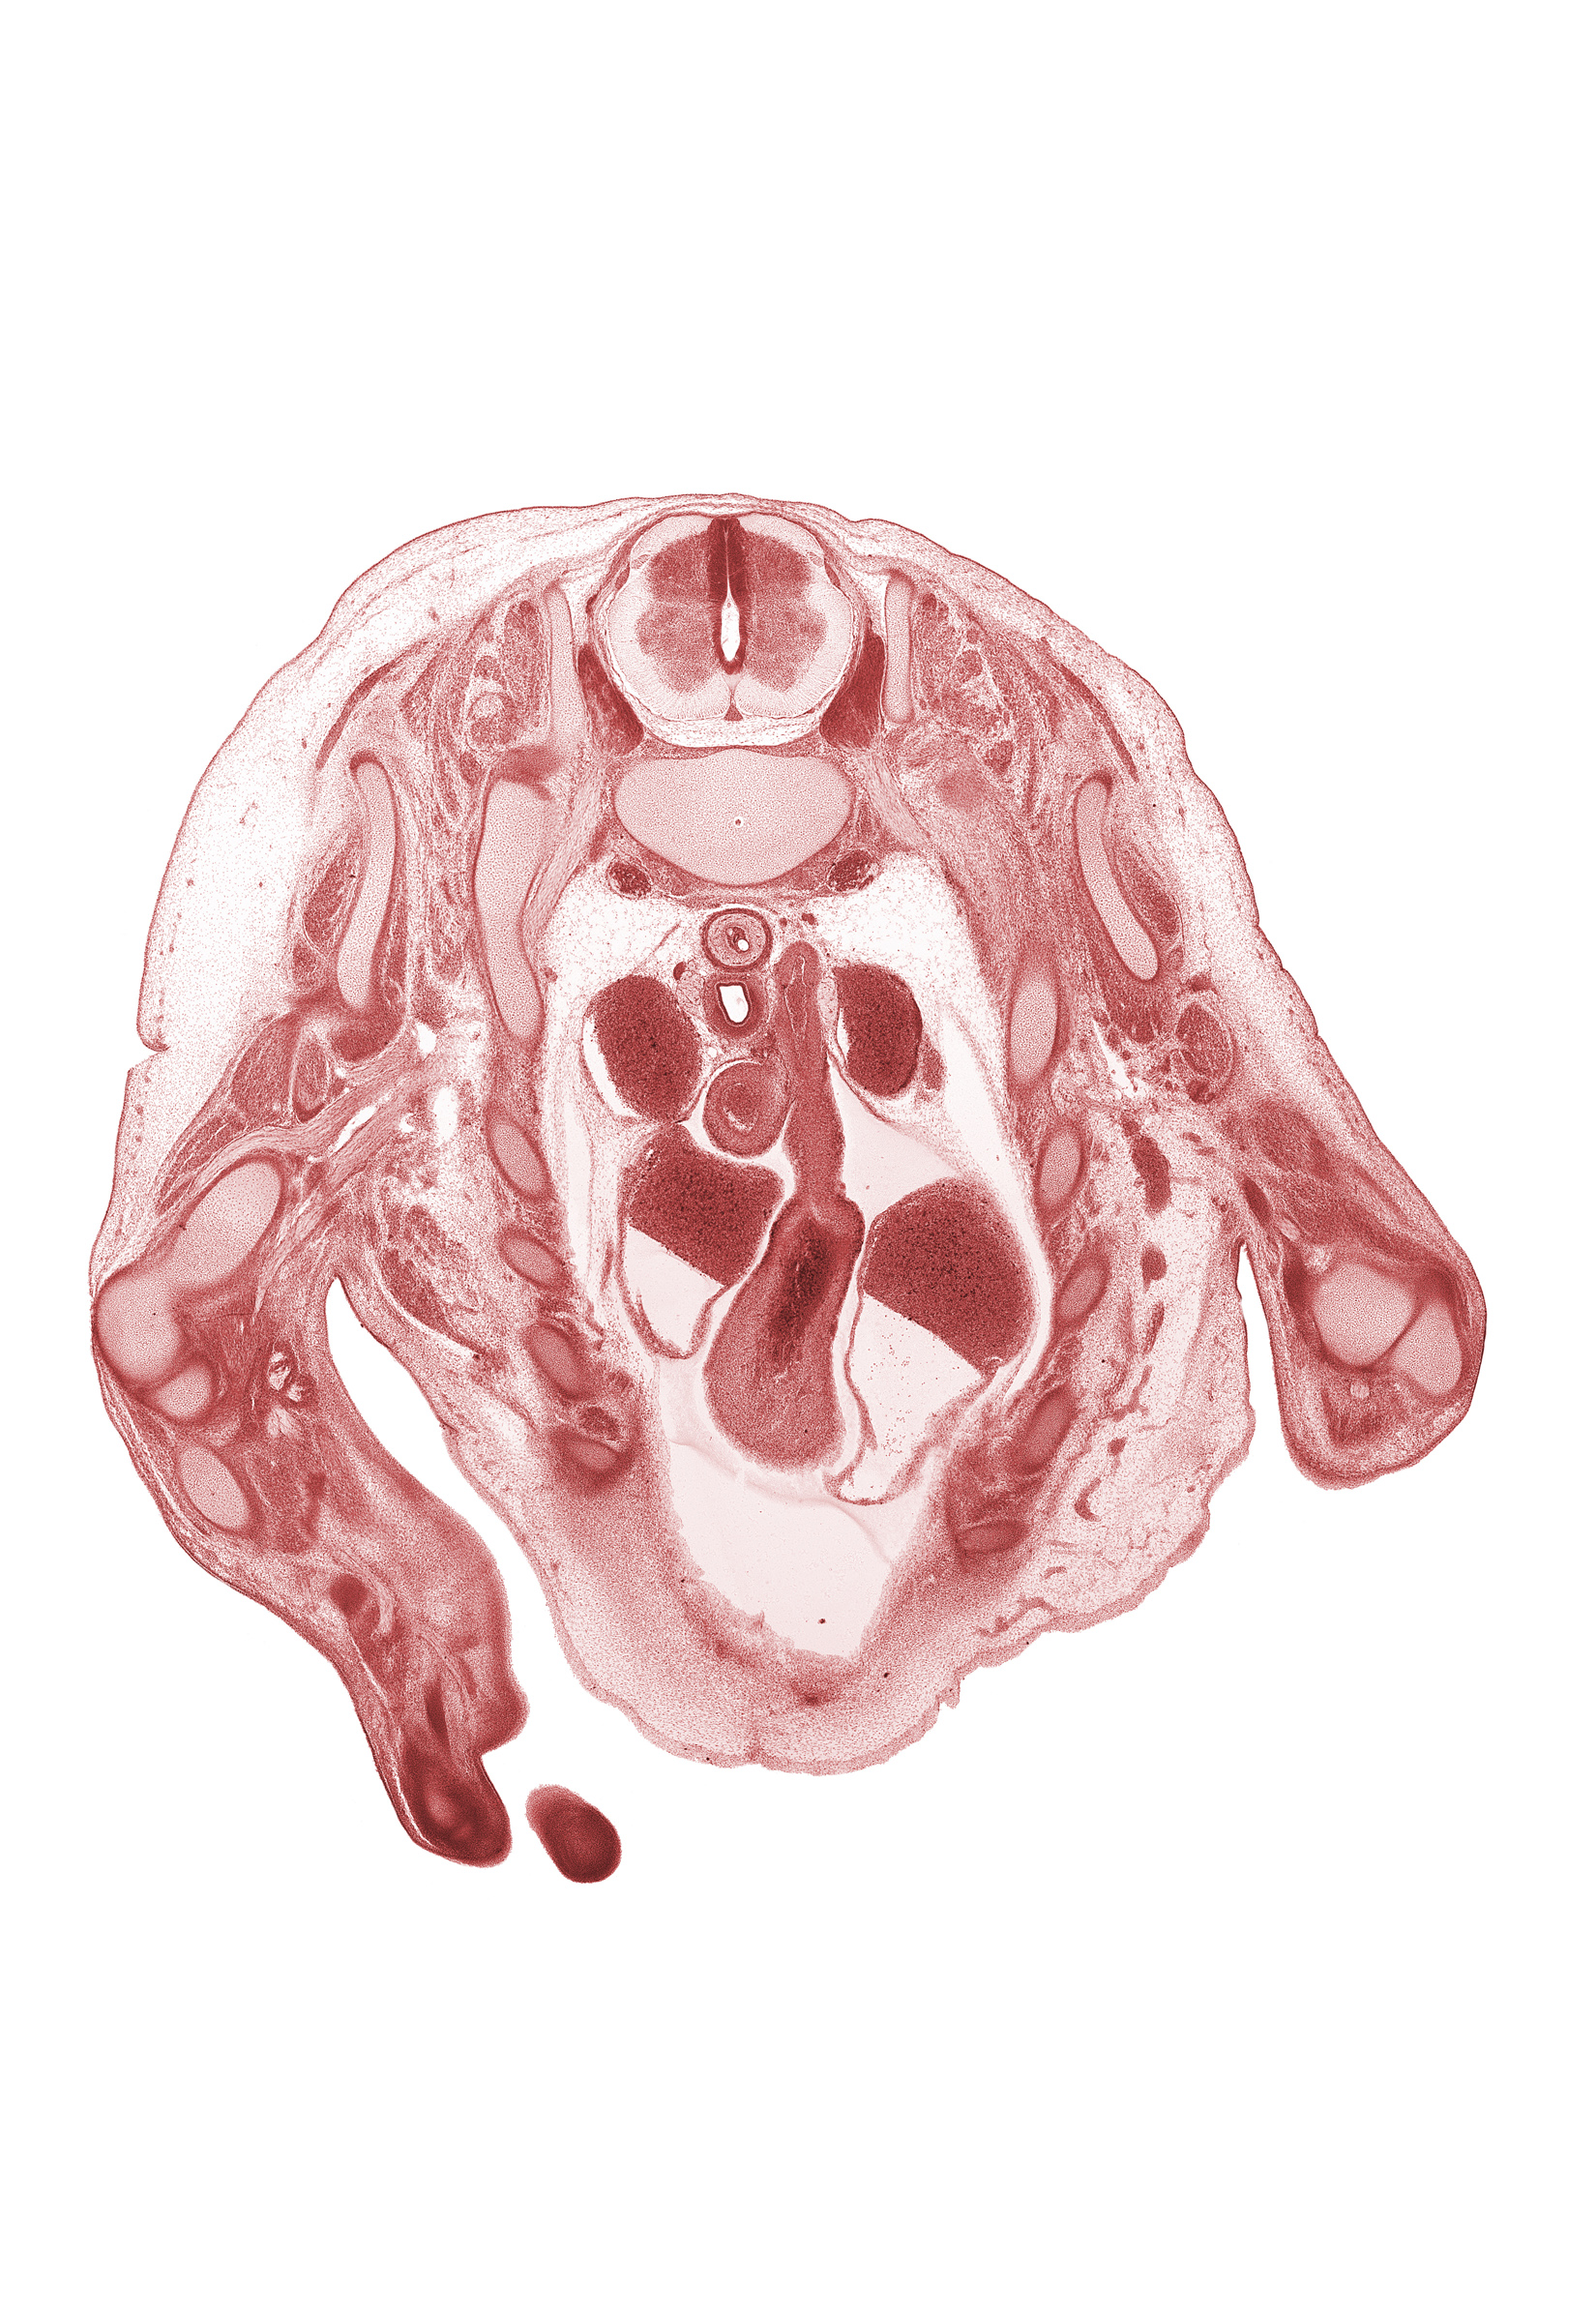 T-1 spinal ganglion, T-1 spinal nerve, aorta, ascending aorta, capitulum of humerus, ductus arteriosus, esophagus, head of radius, infundibulum of right ventricle, left atrium, pericardial cavity, pulmonary semilunar valve, pulmonary trunk, rib 2, right atrium, right ventricle, scapula, superior vena cava, sympathetic trunk, trachea, ulna